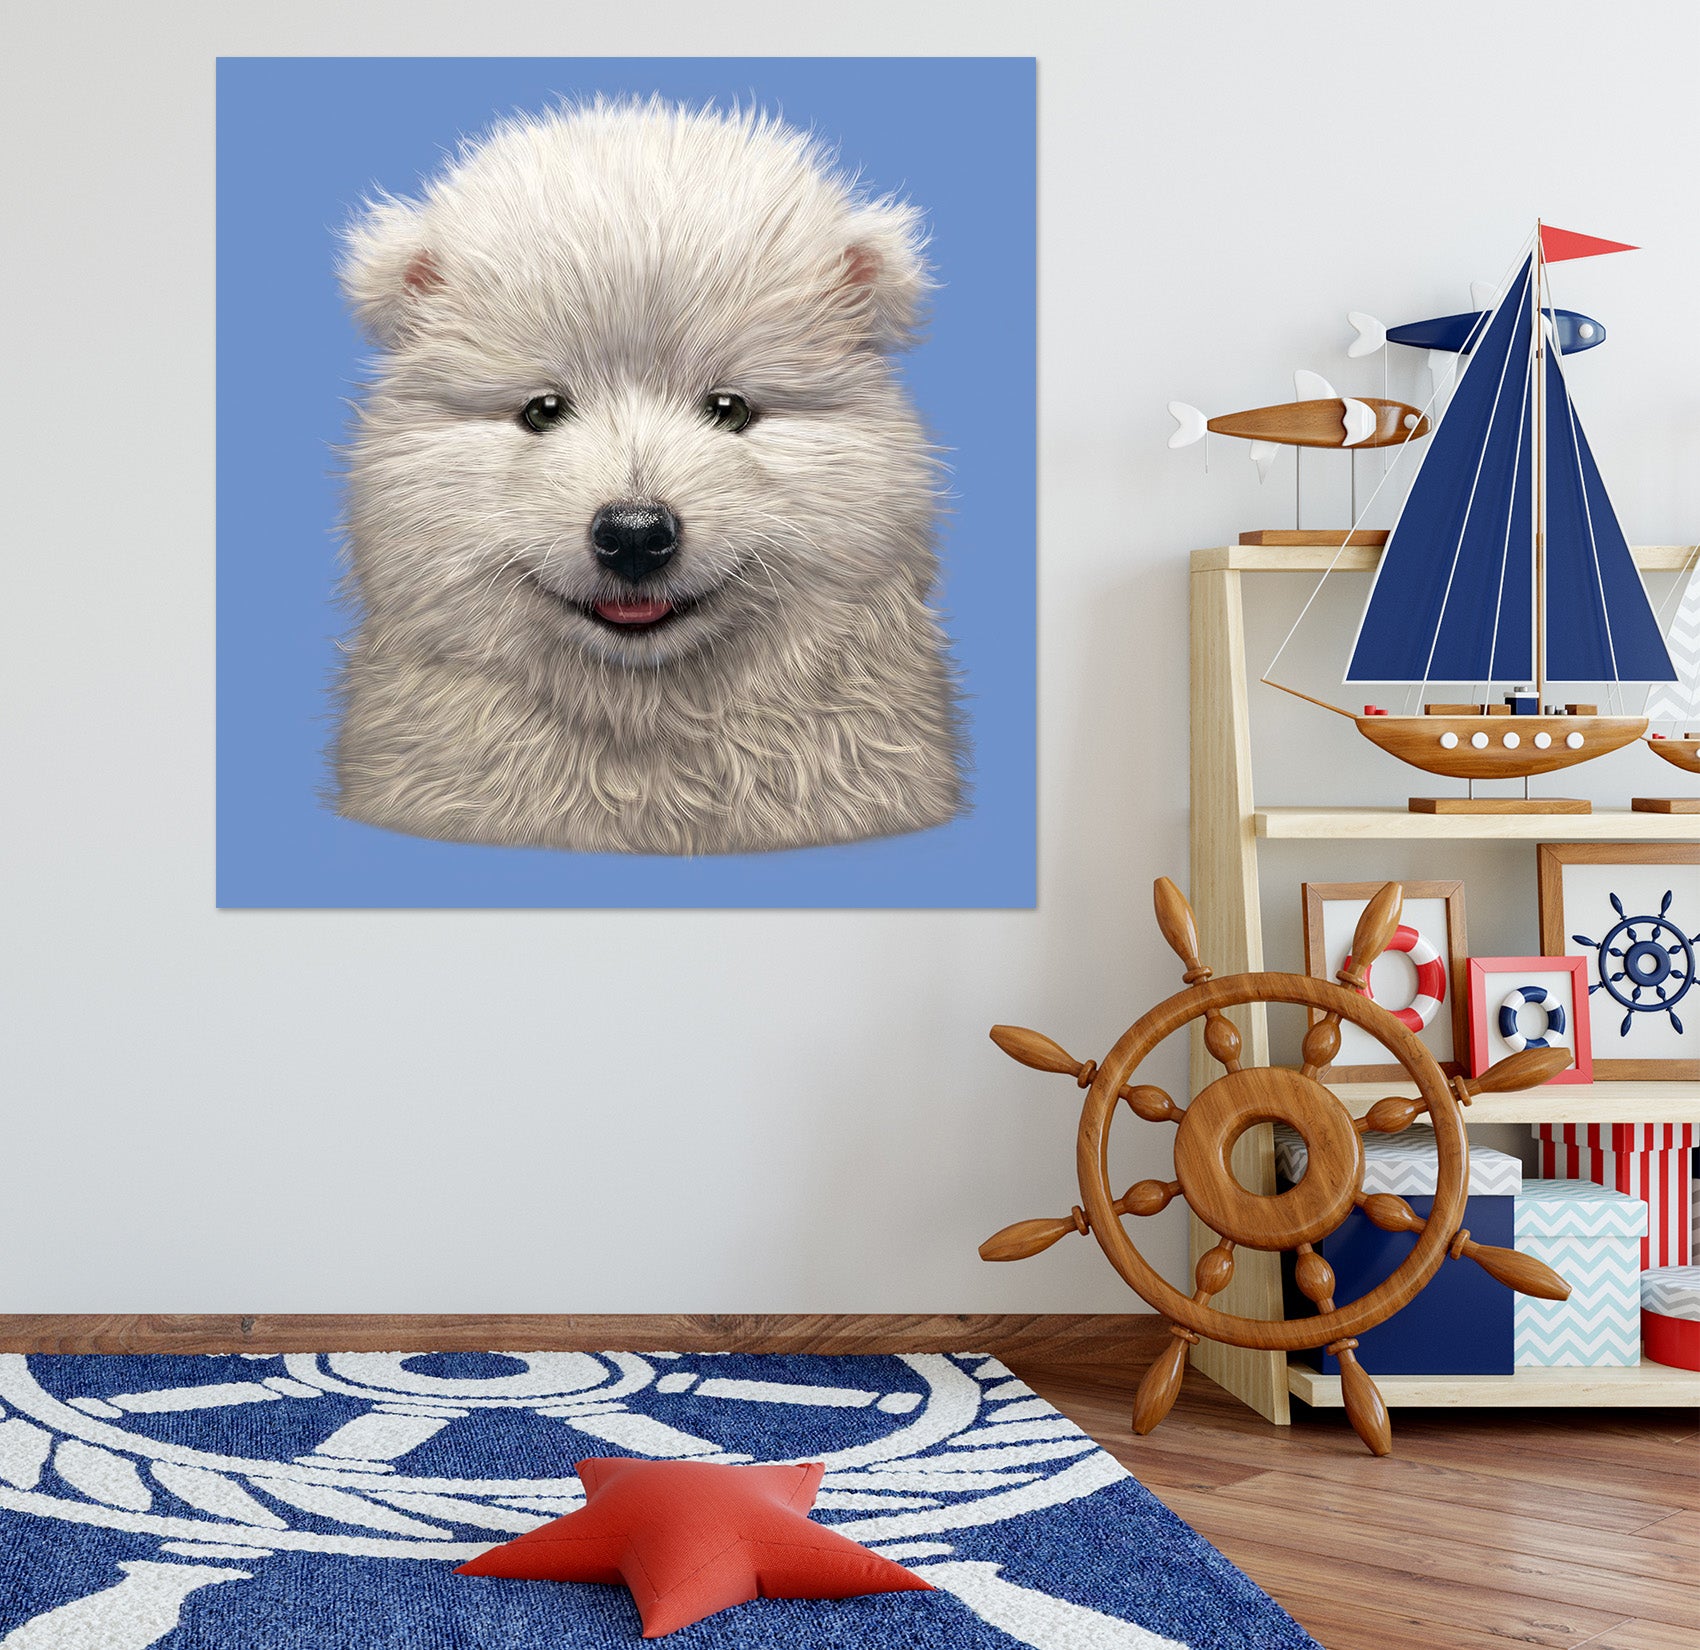 3D Samoyed Puppy BF Def 066 Vincent Hie Wall Sticker